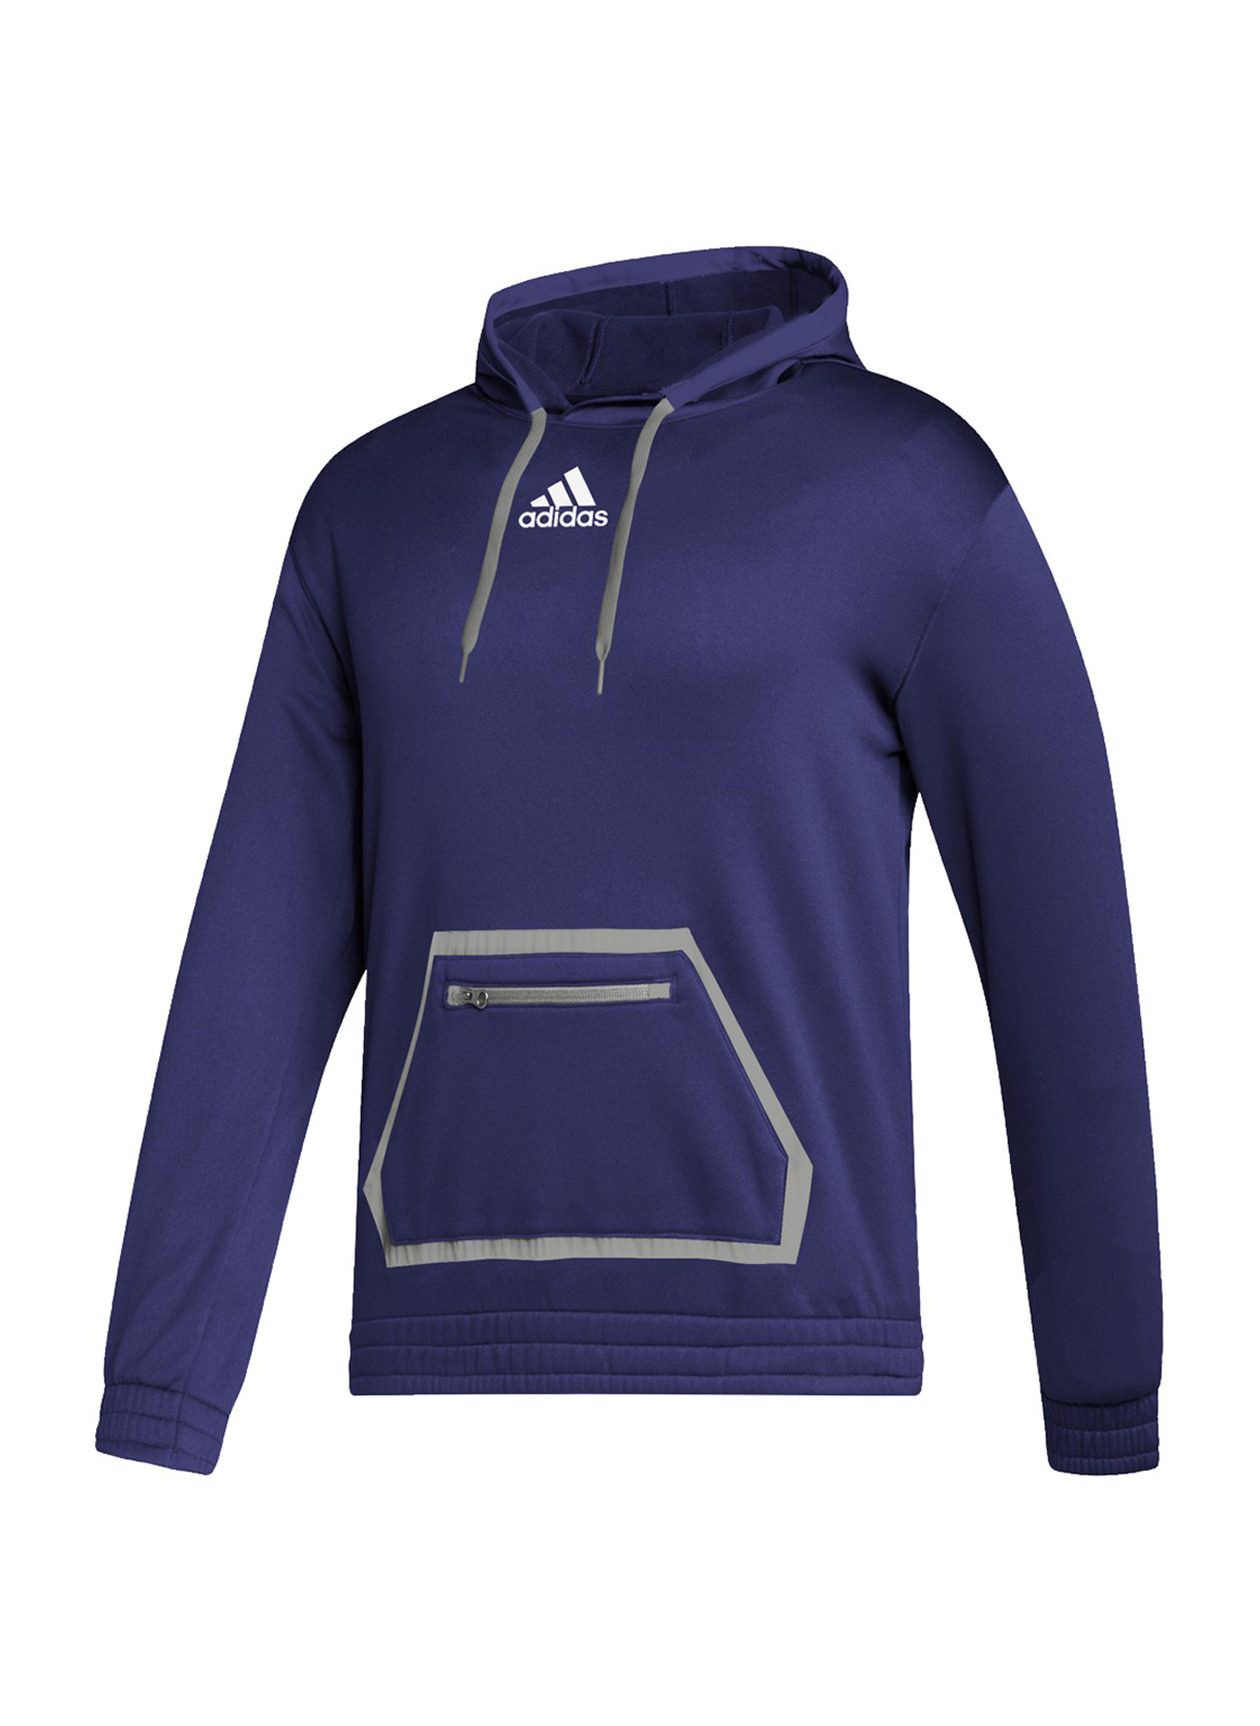 Adidas Men's Team Collegiate Purple/MGH Solid Grey Team Issue Pullover Hoodie